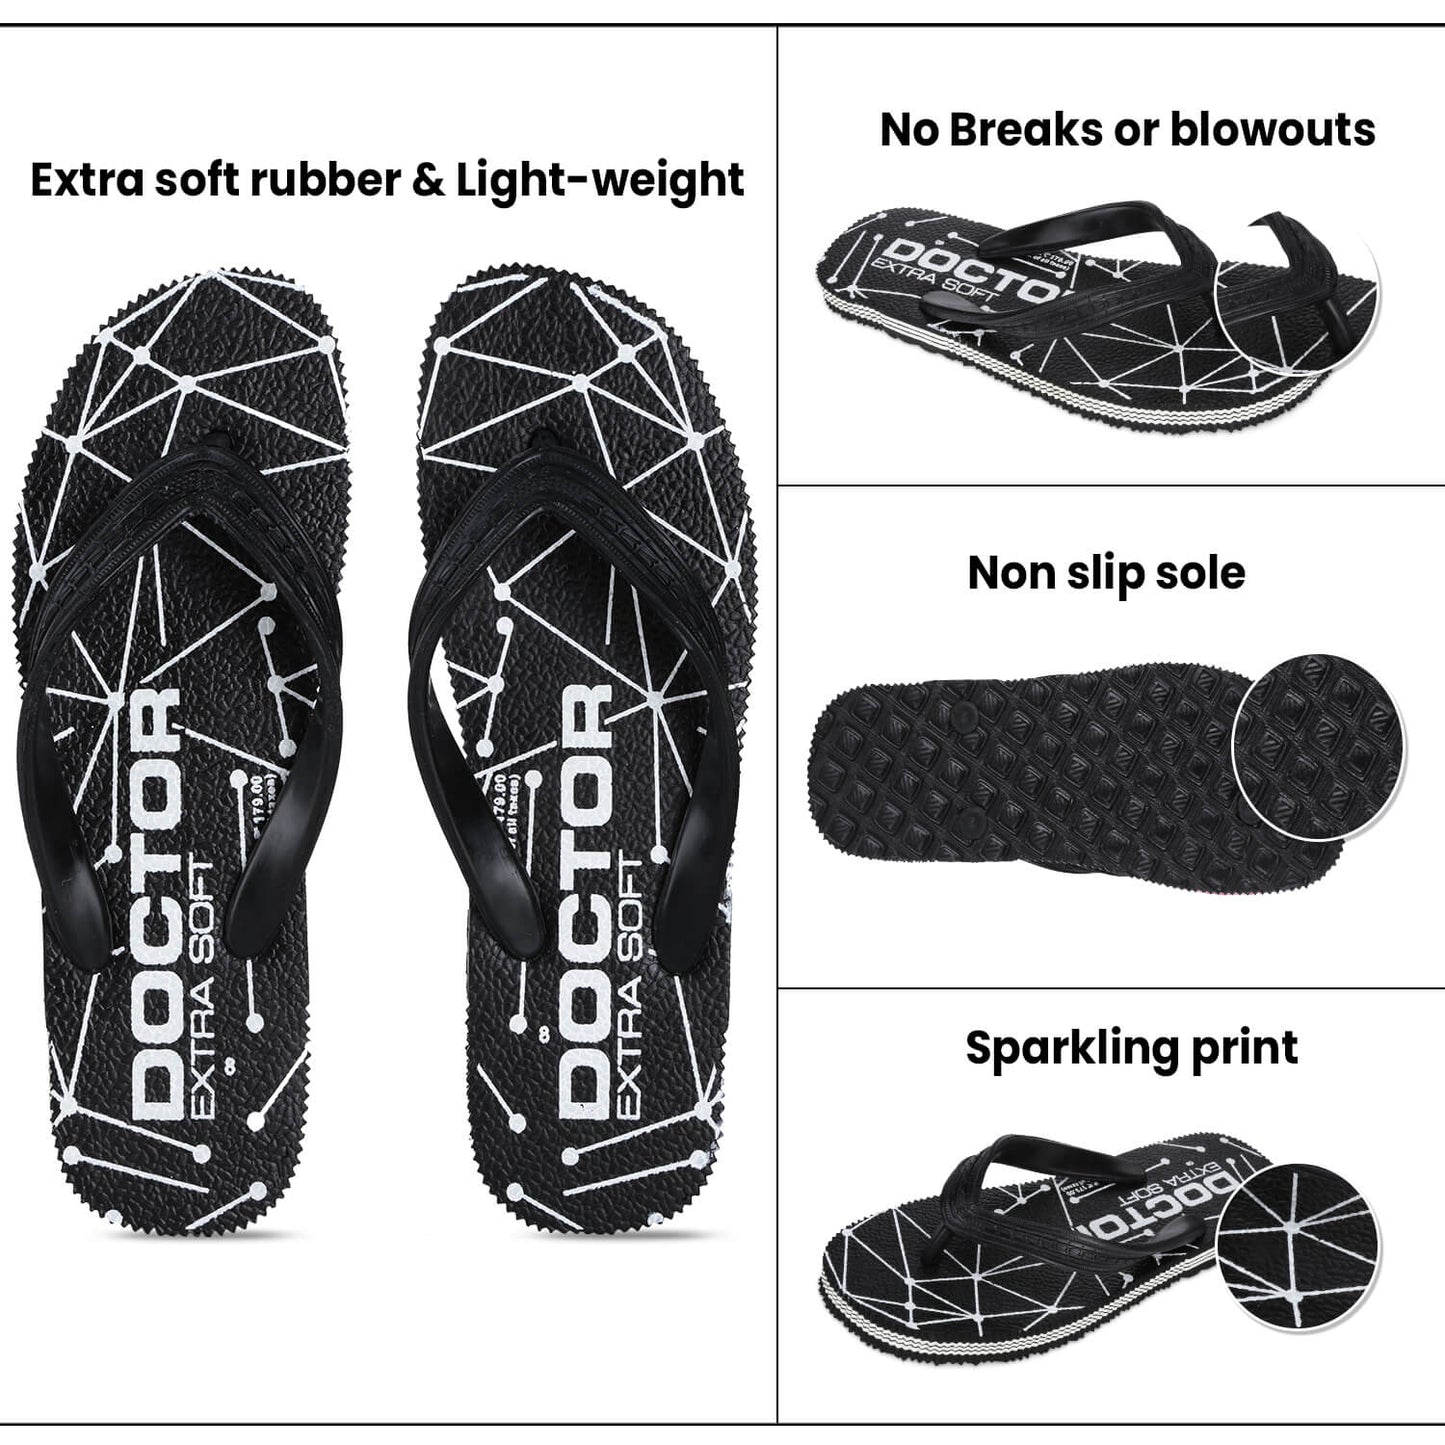 DOCTOR EXTRA SOFT Women's Slippers/Flip-Flops Hawaii OR-D-02 Lightweight & Anti Skid